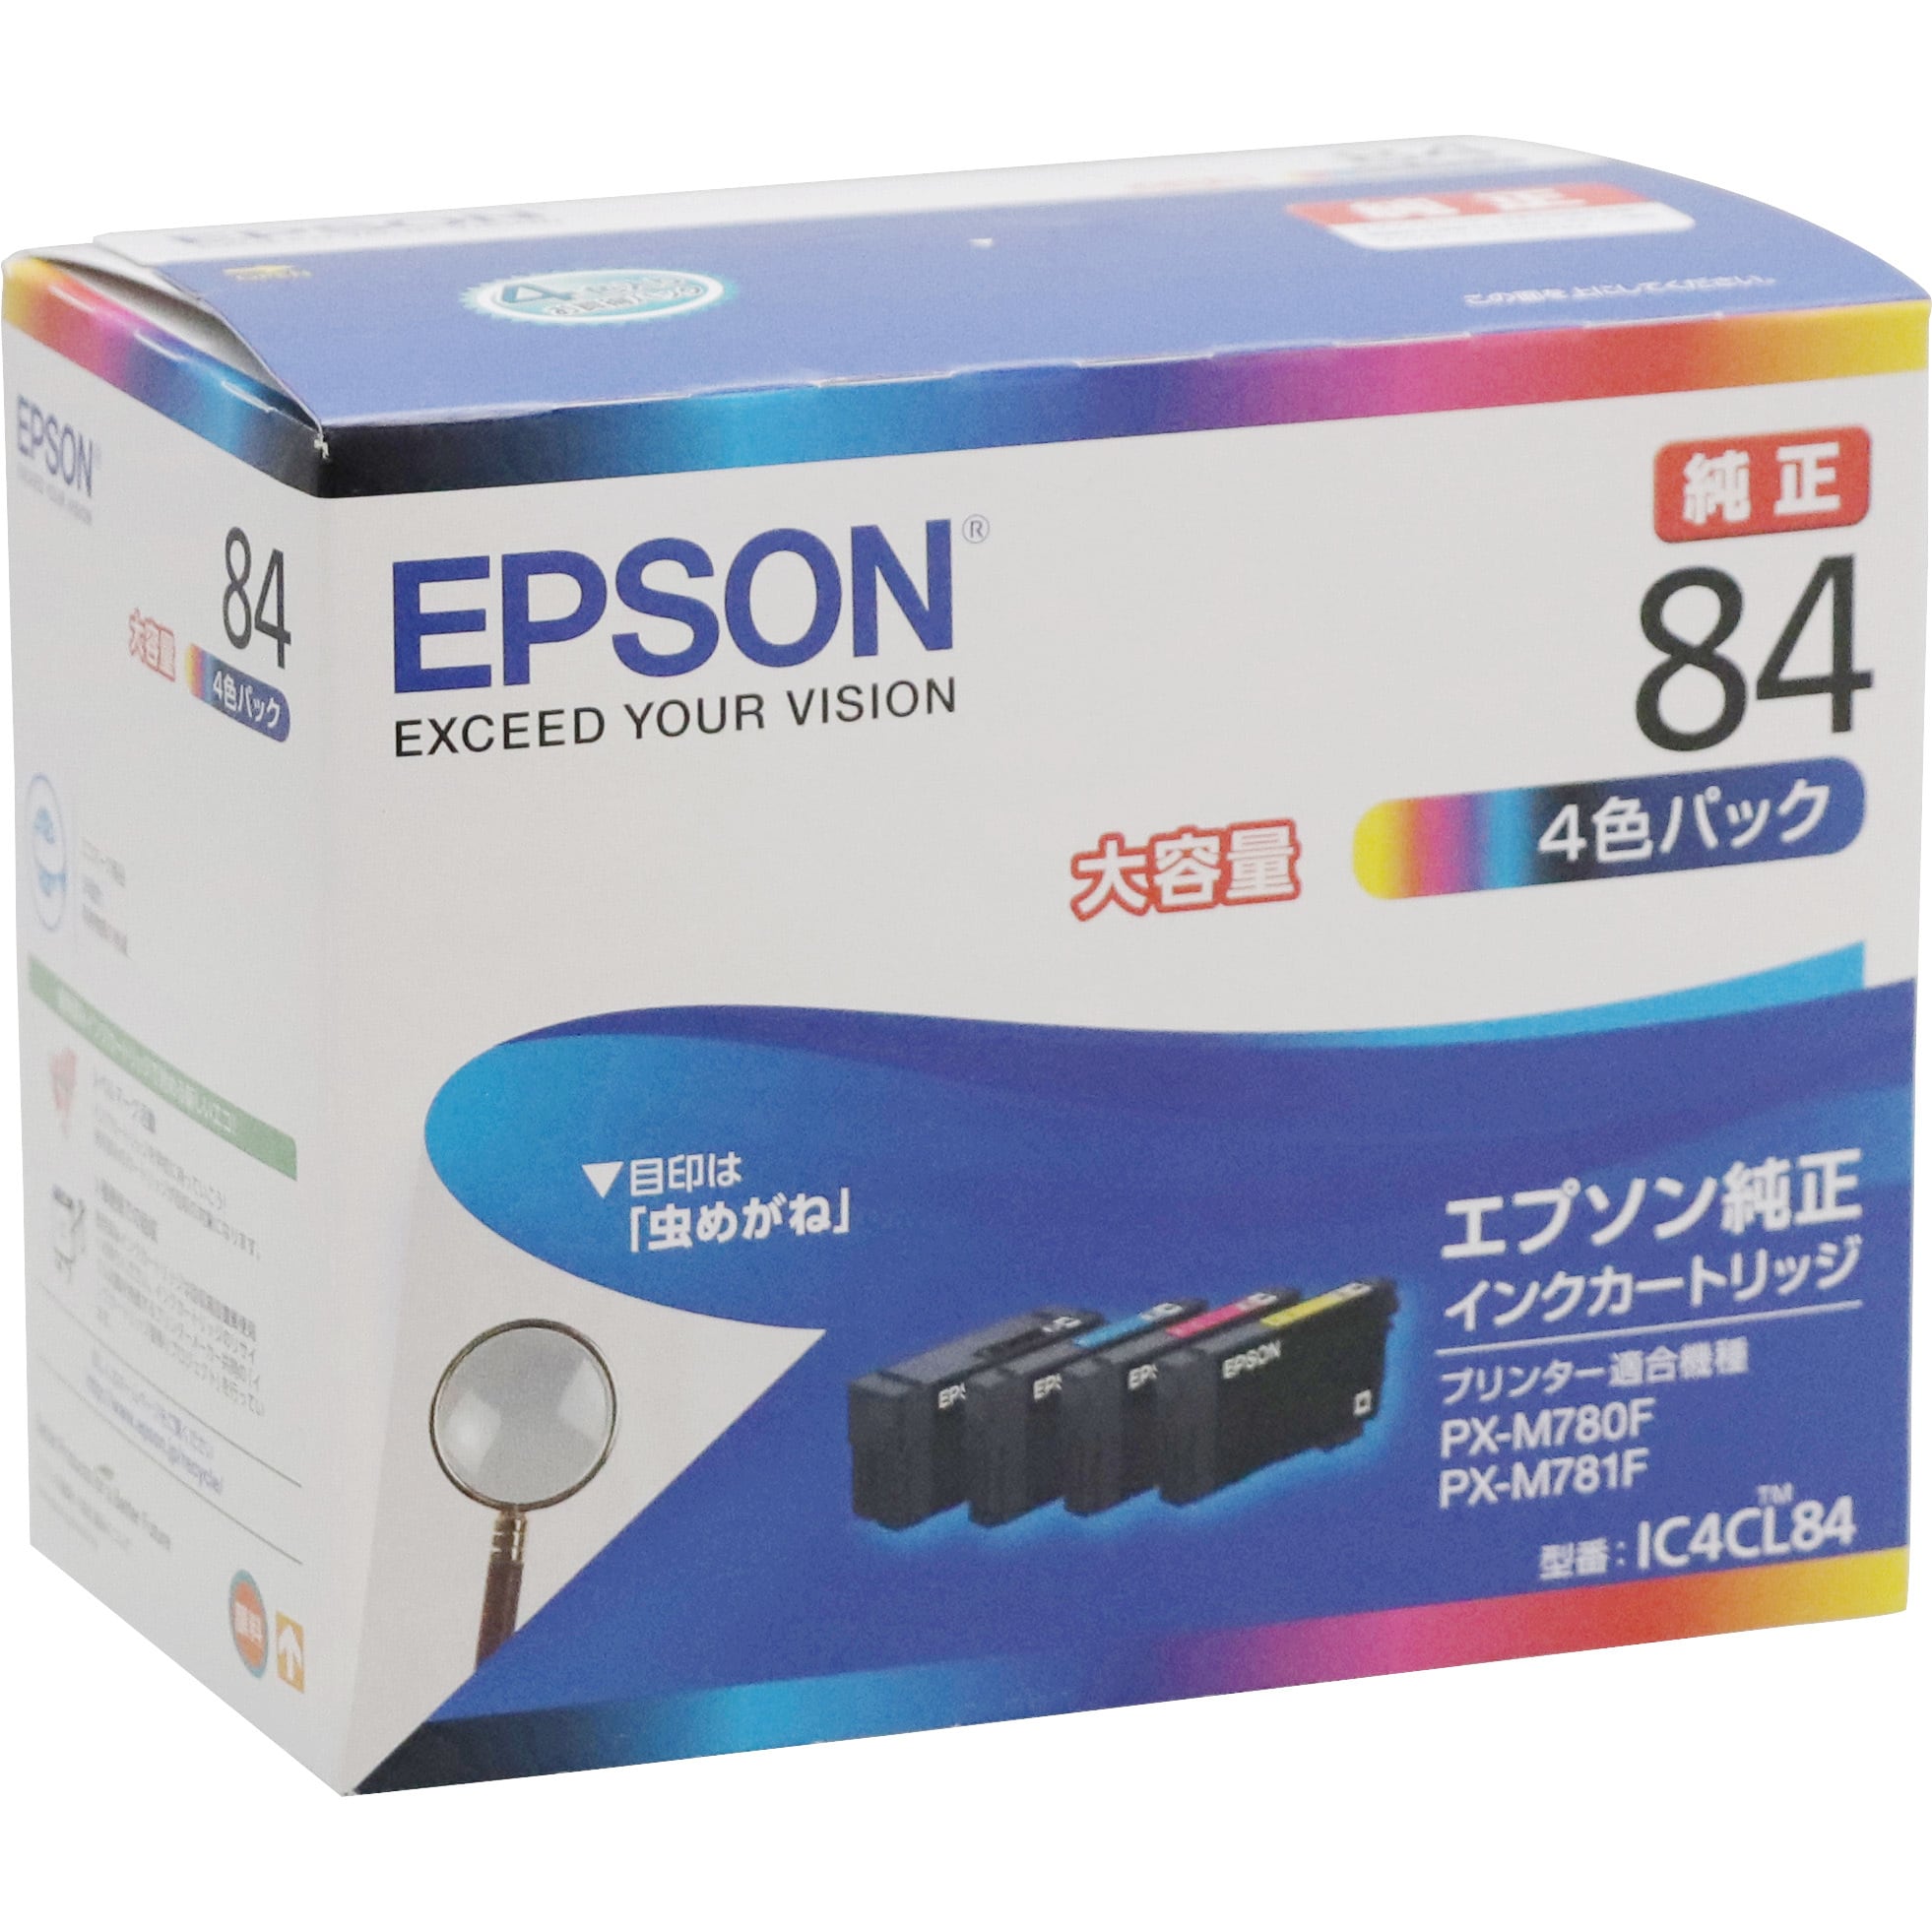 EPSON IC4CL84